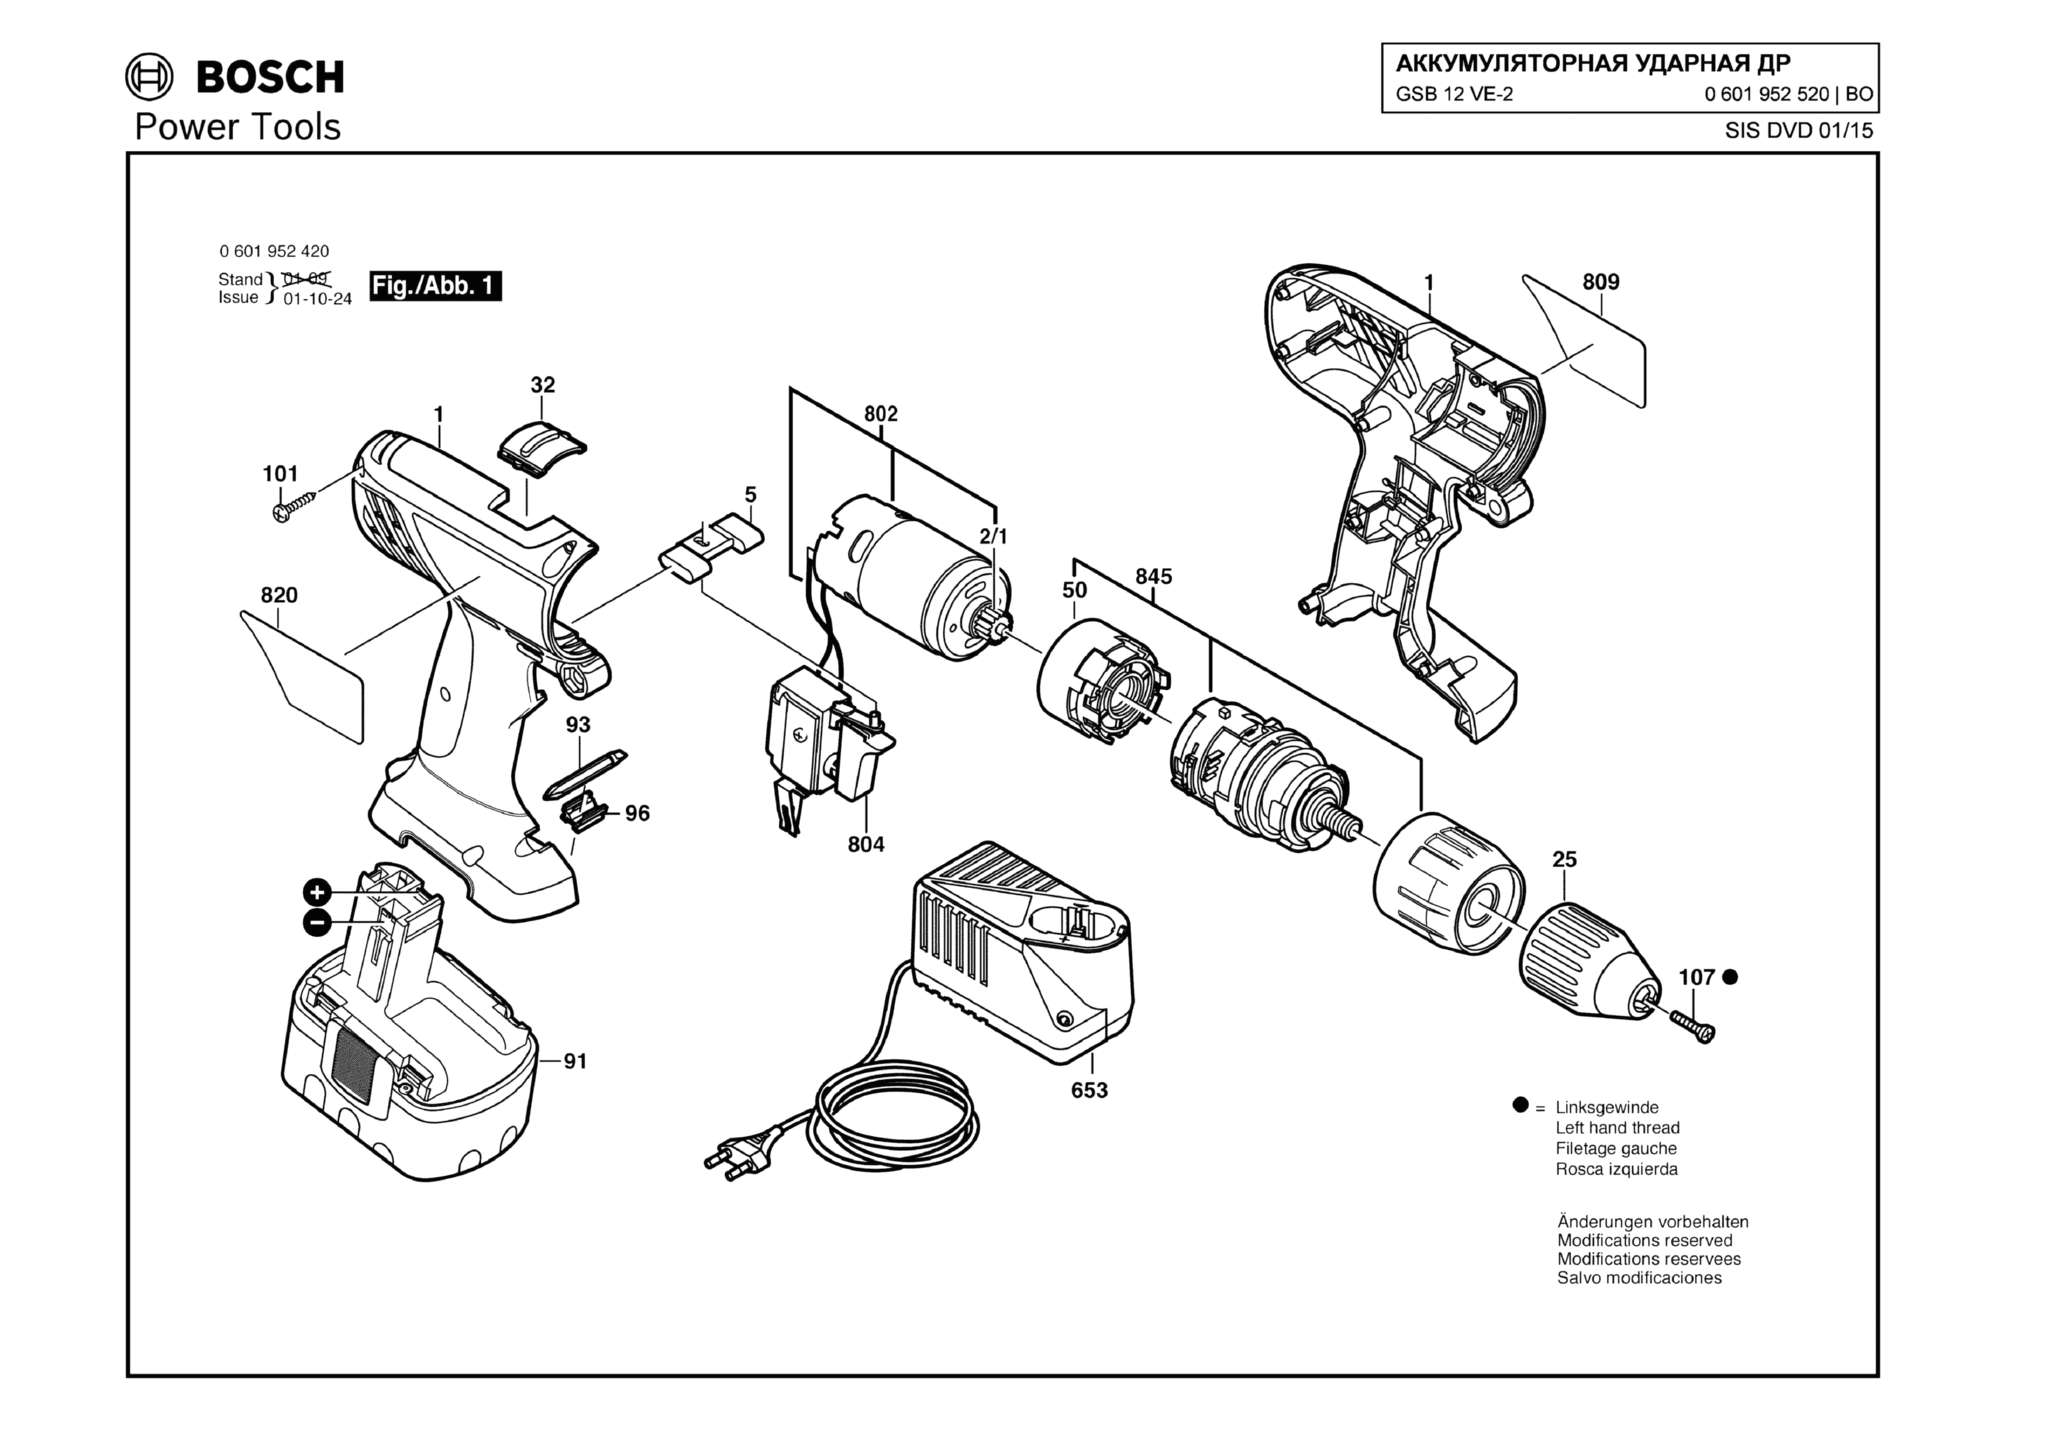 Запчасти, схема и деталировка Bosch GSB 12 VE-2 (ТИП 0601952555)